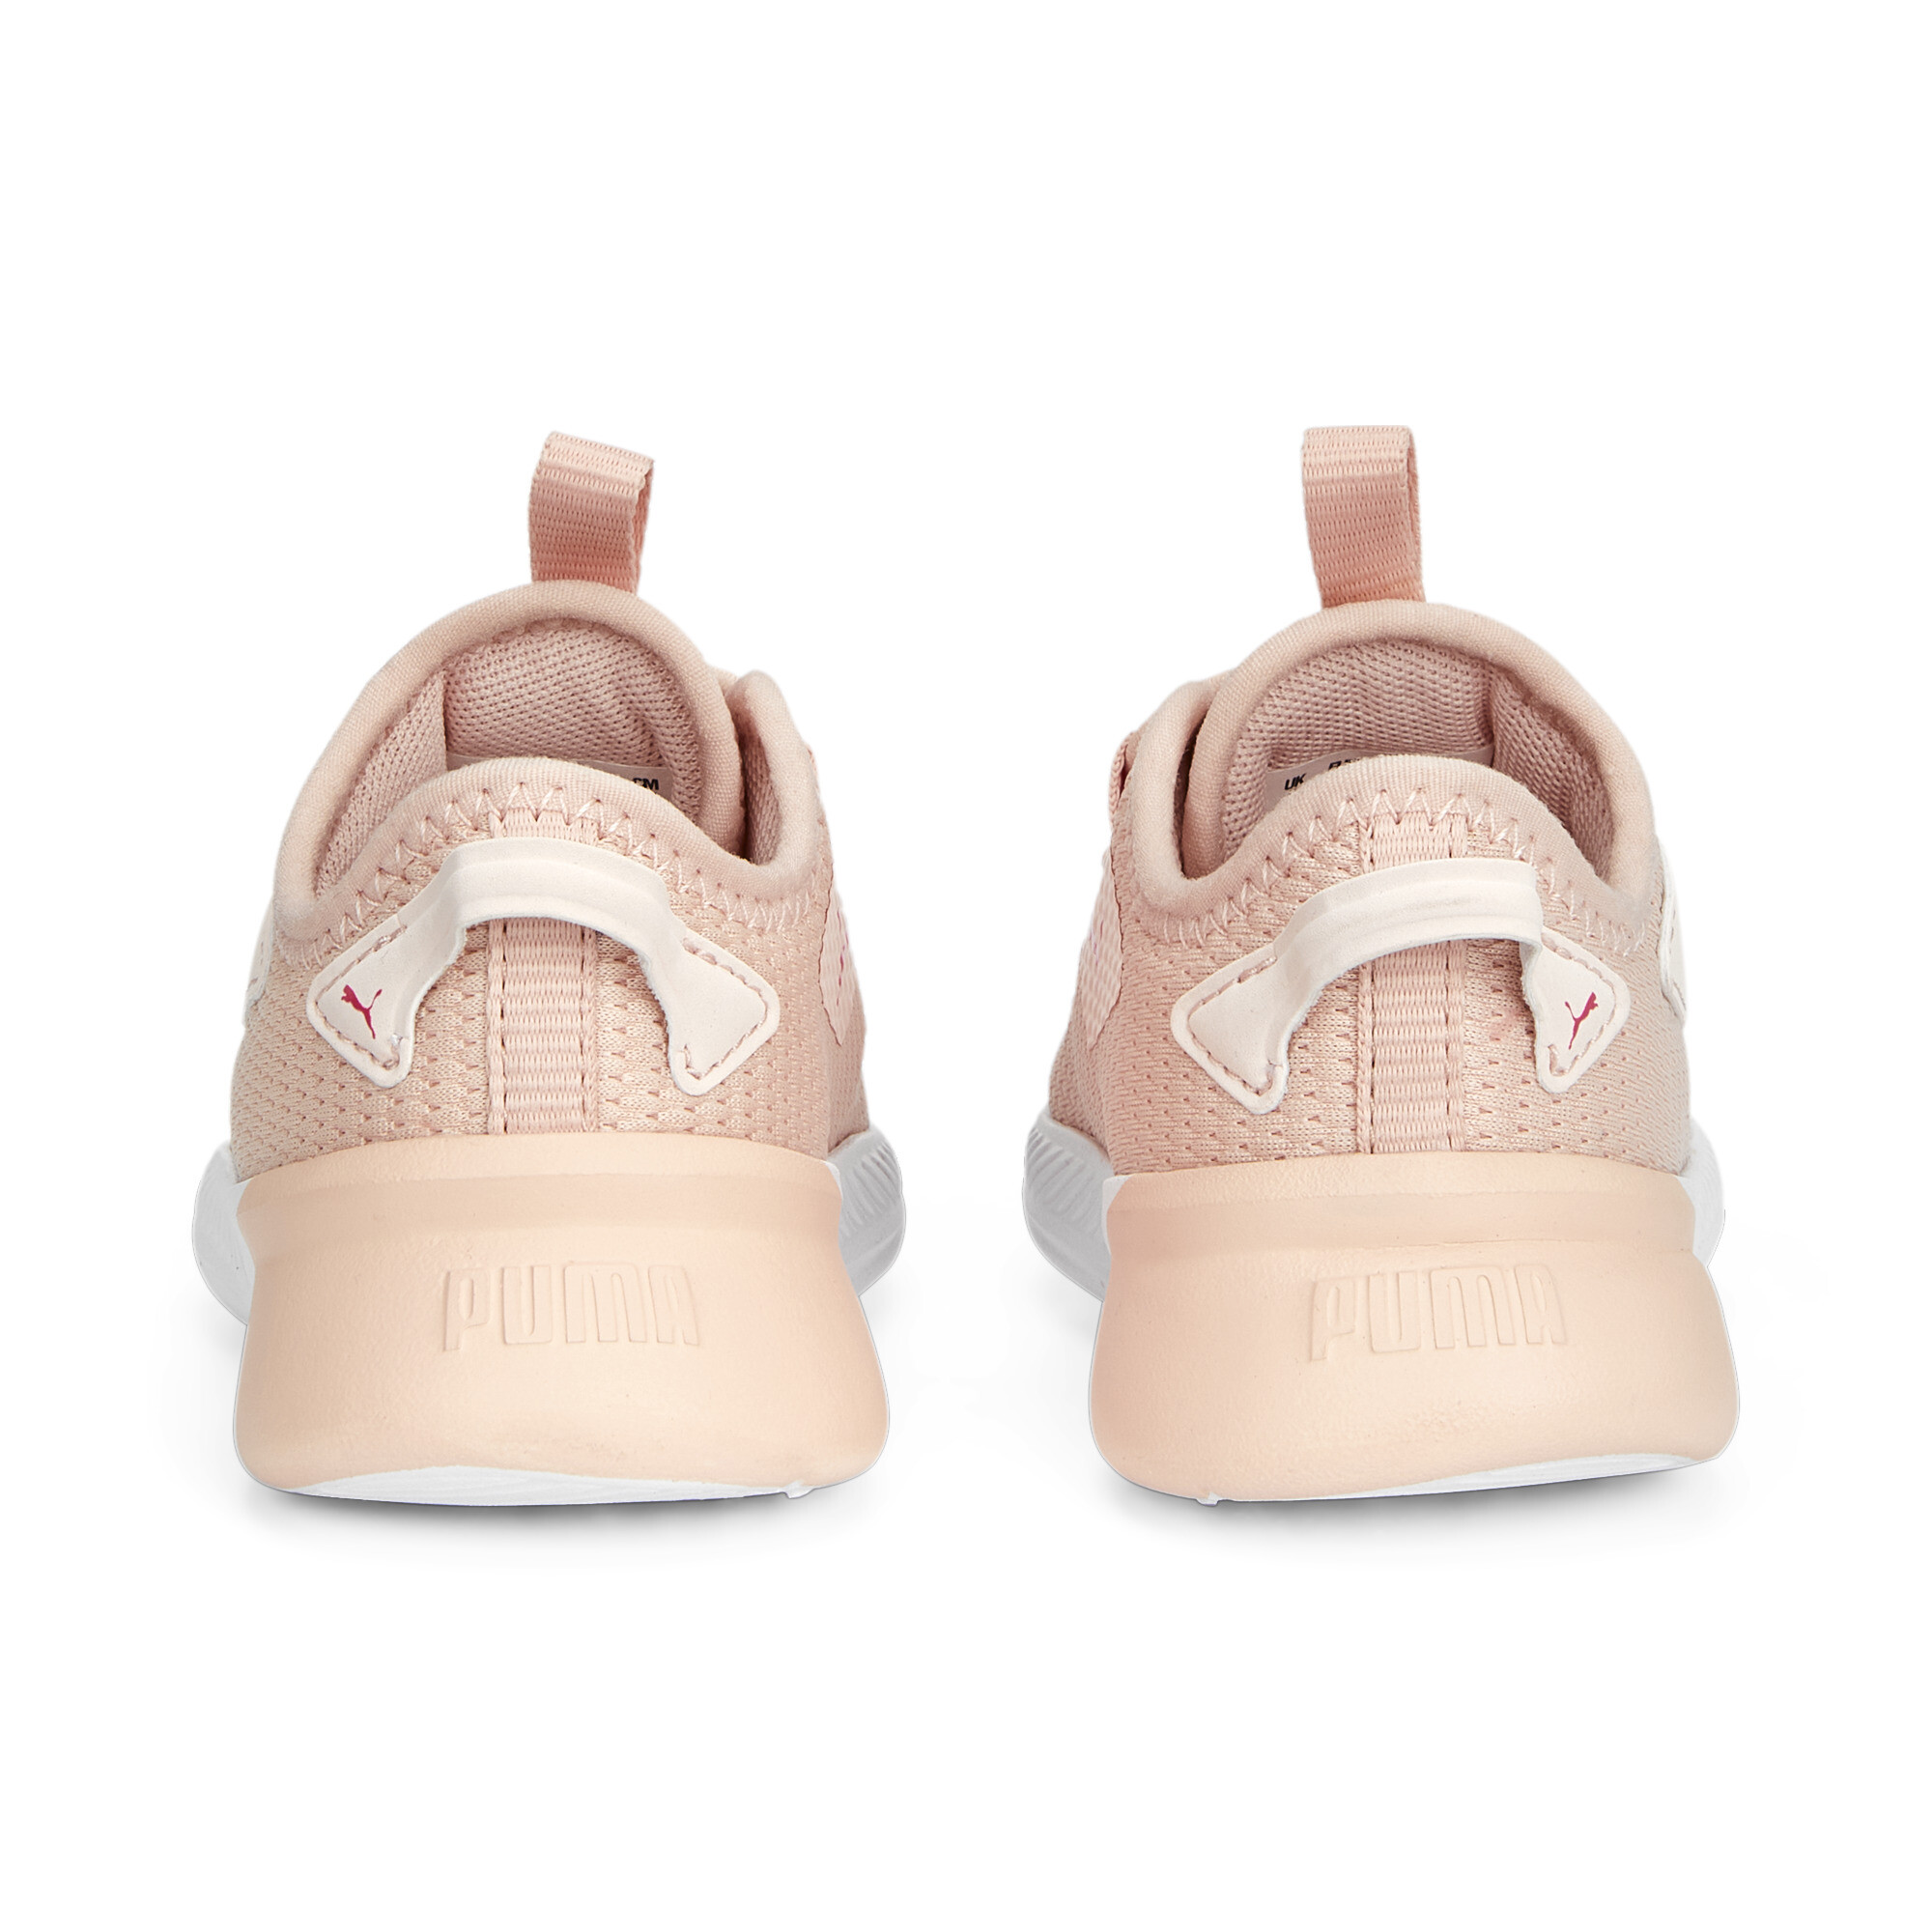 Puma Retaliate 2 AC Sneakers Babies, Pink, Size 26, Shoes